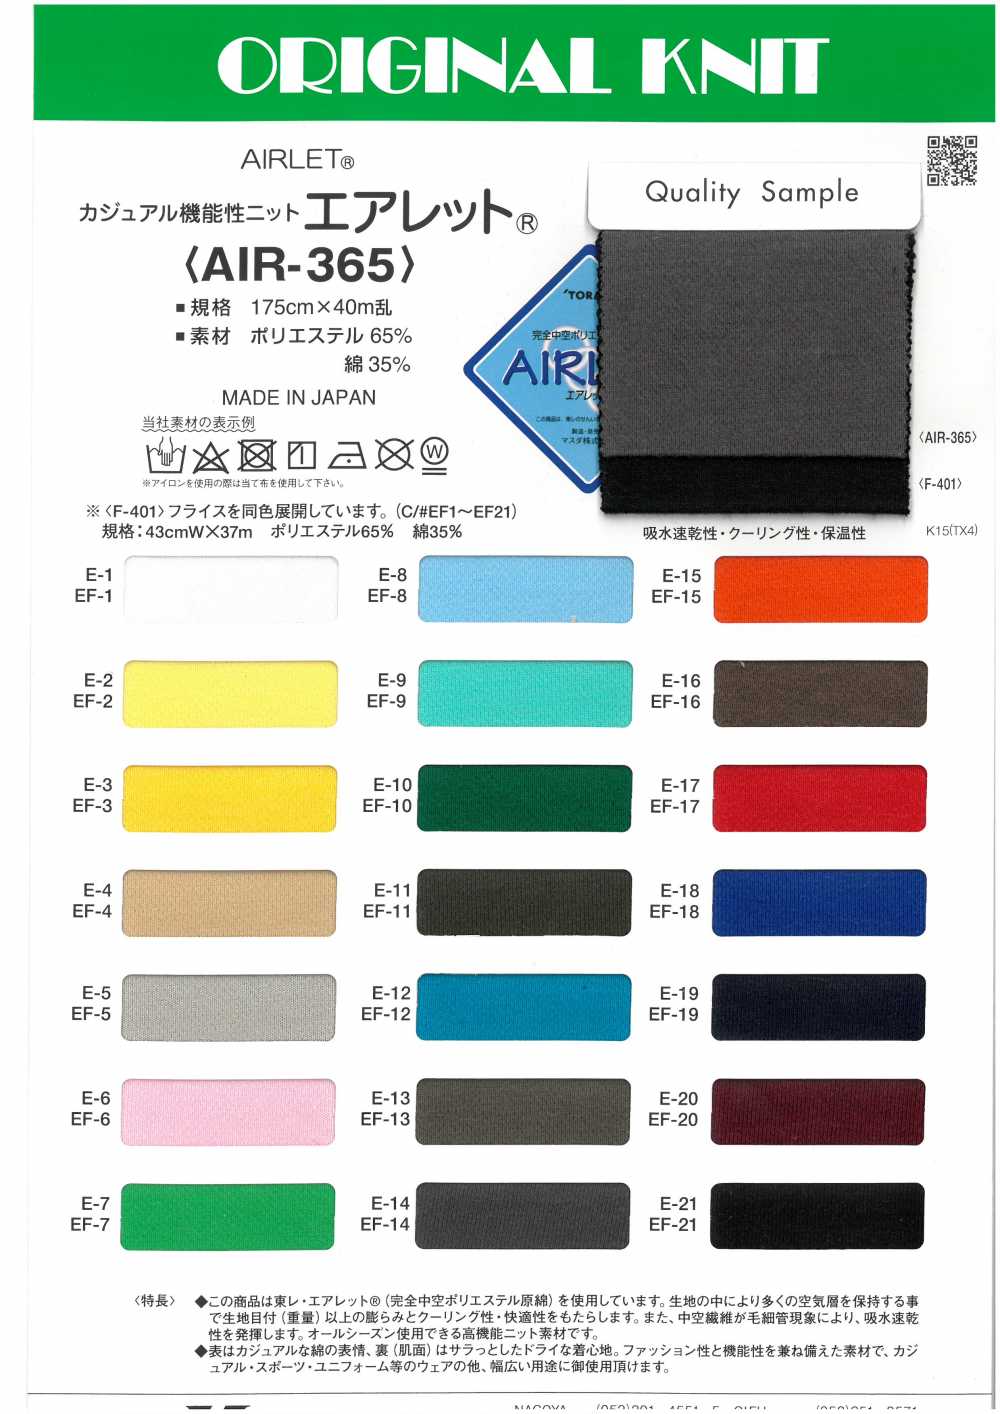 AIR-155 Shin Airlet Pro[Textile / Fabric] Masuda